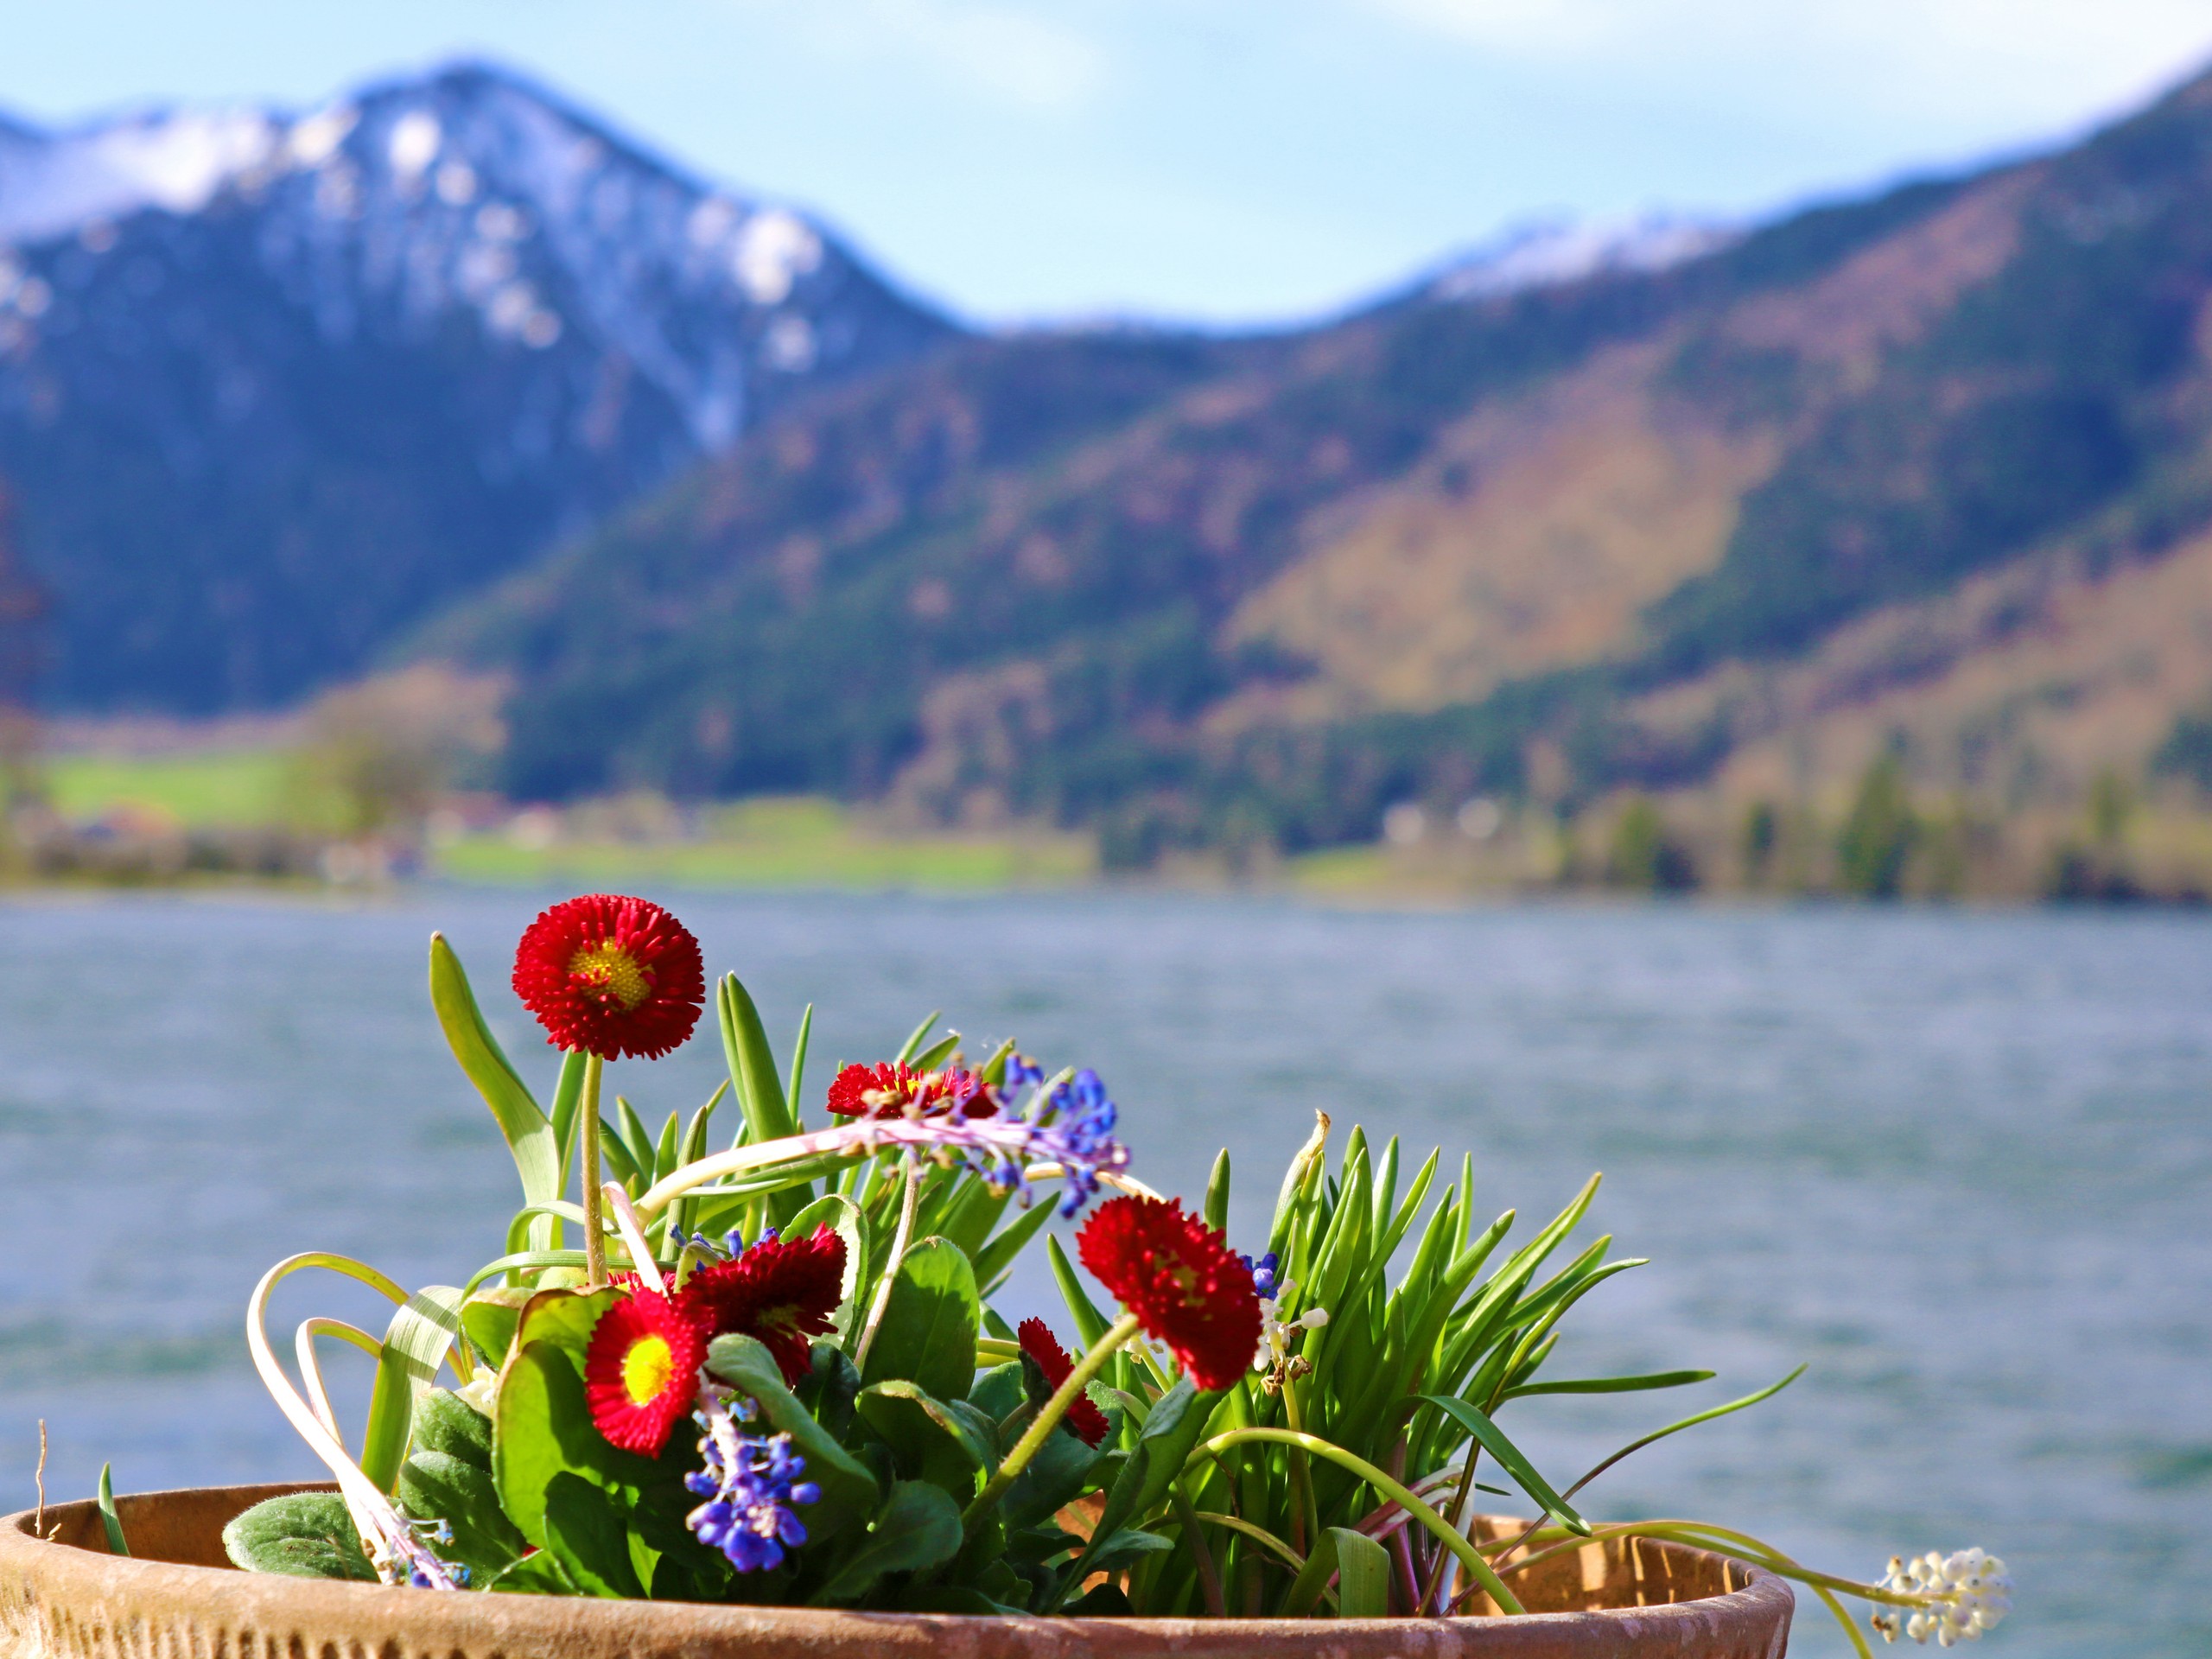 Lake and flower views seen while biking in Bavaria